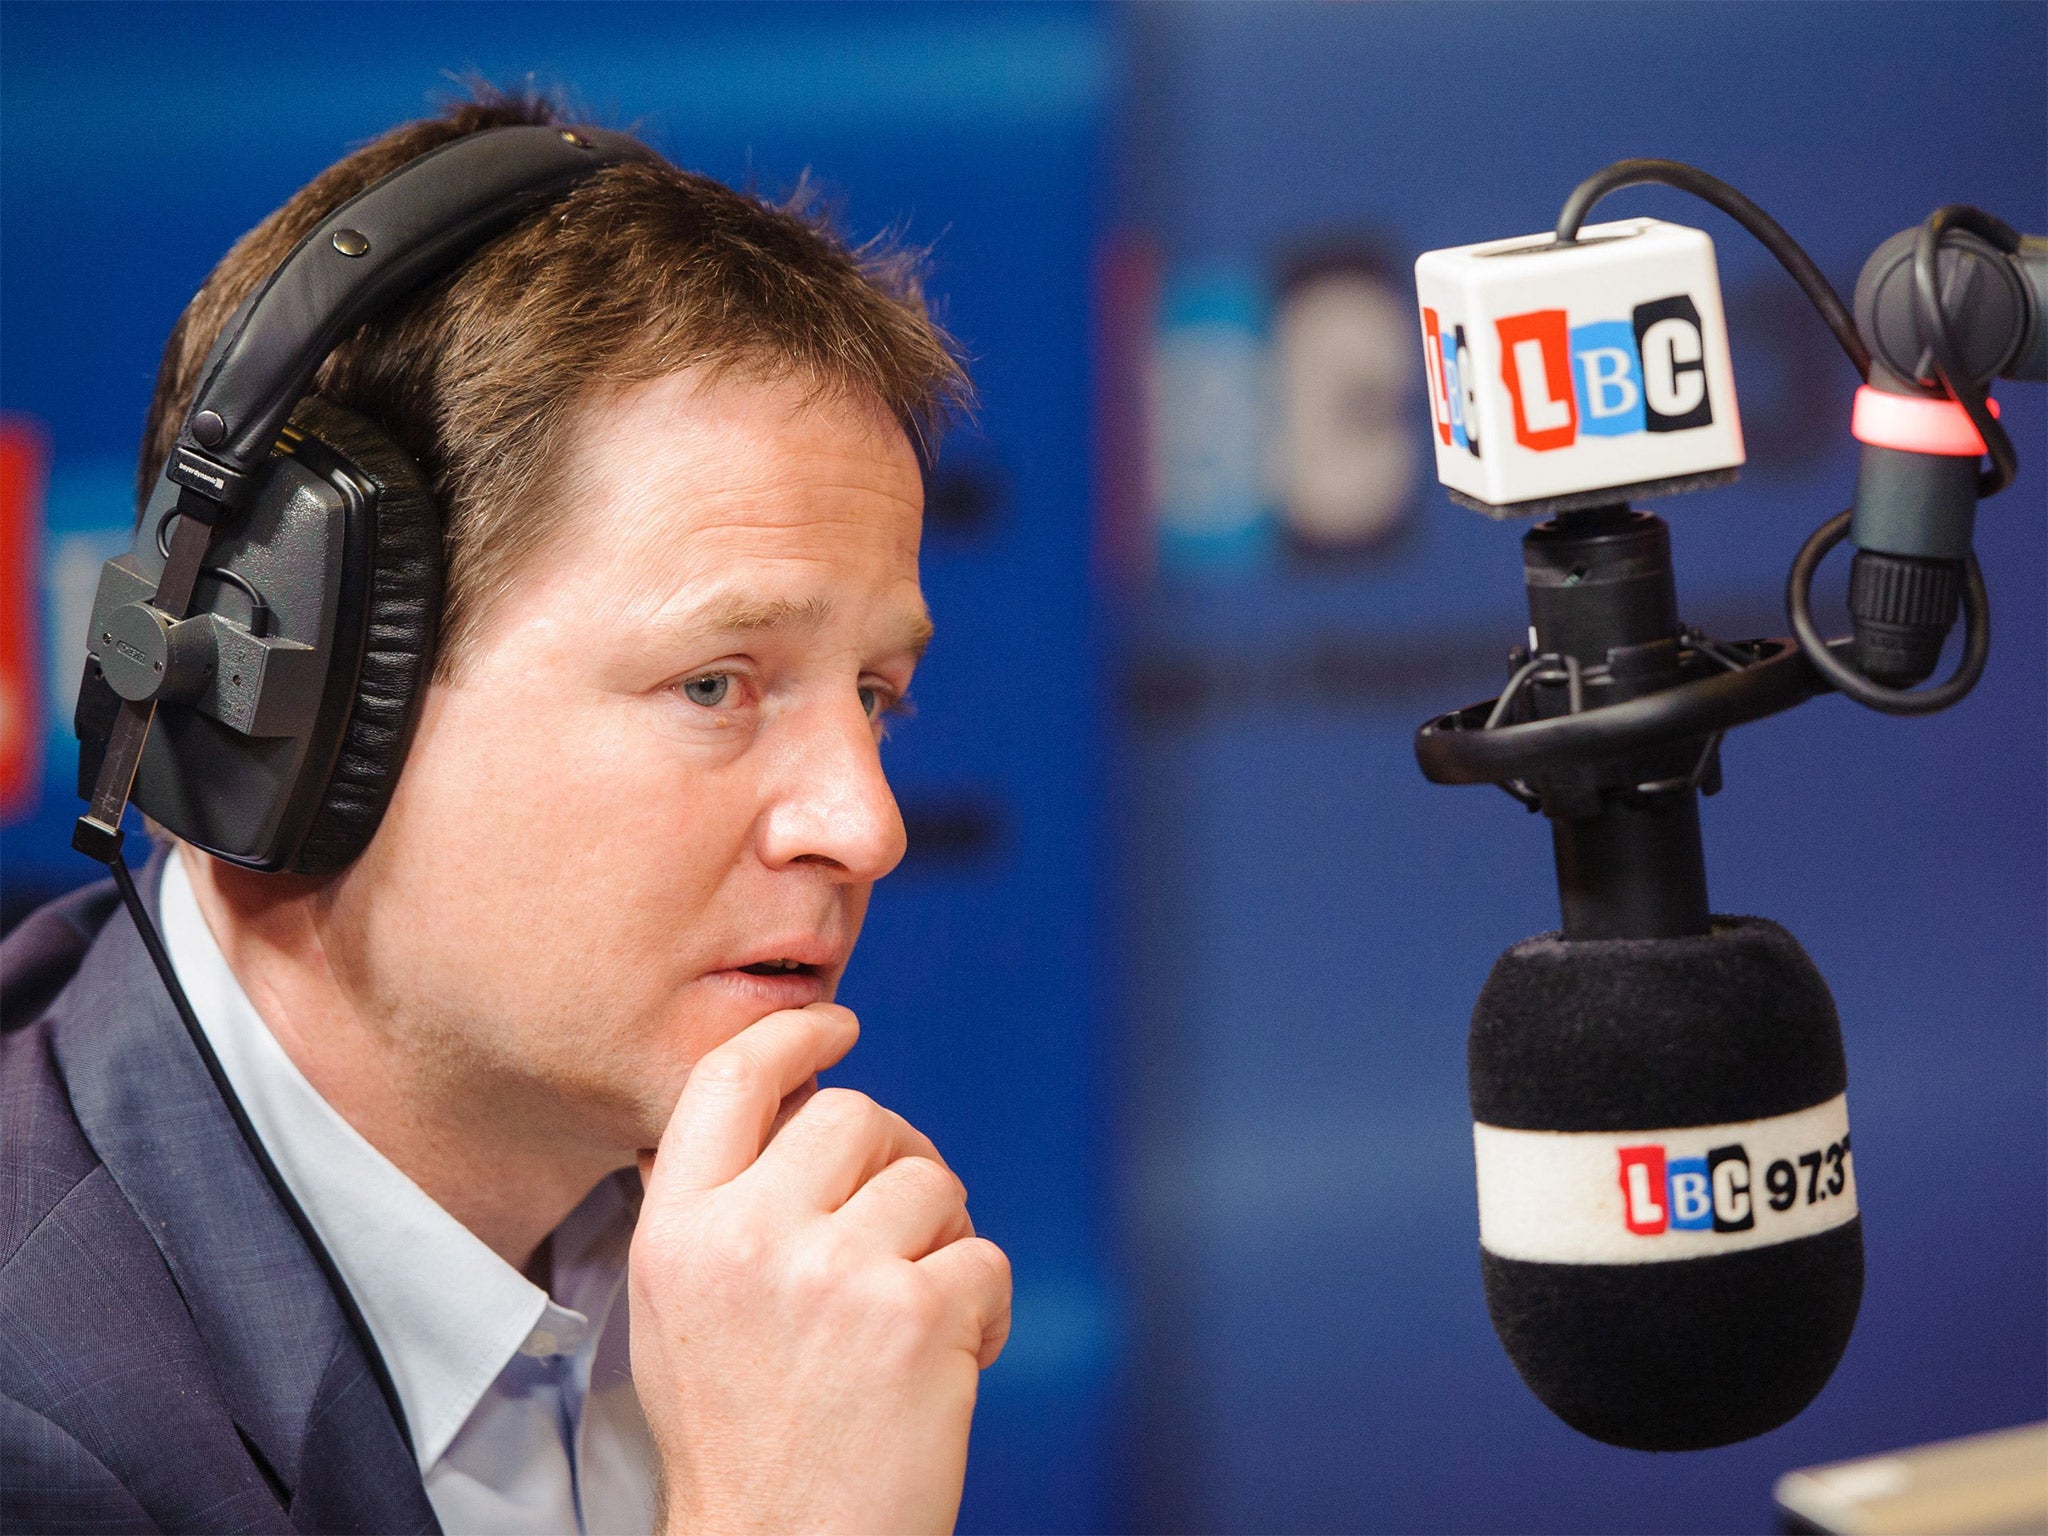 The former Lib Dem leader on his LBC radio show, Call Clegg